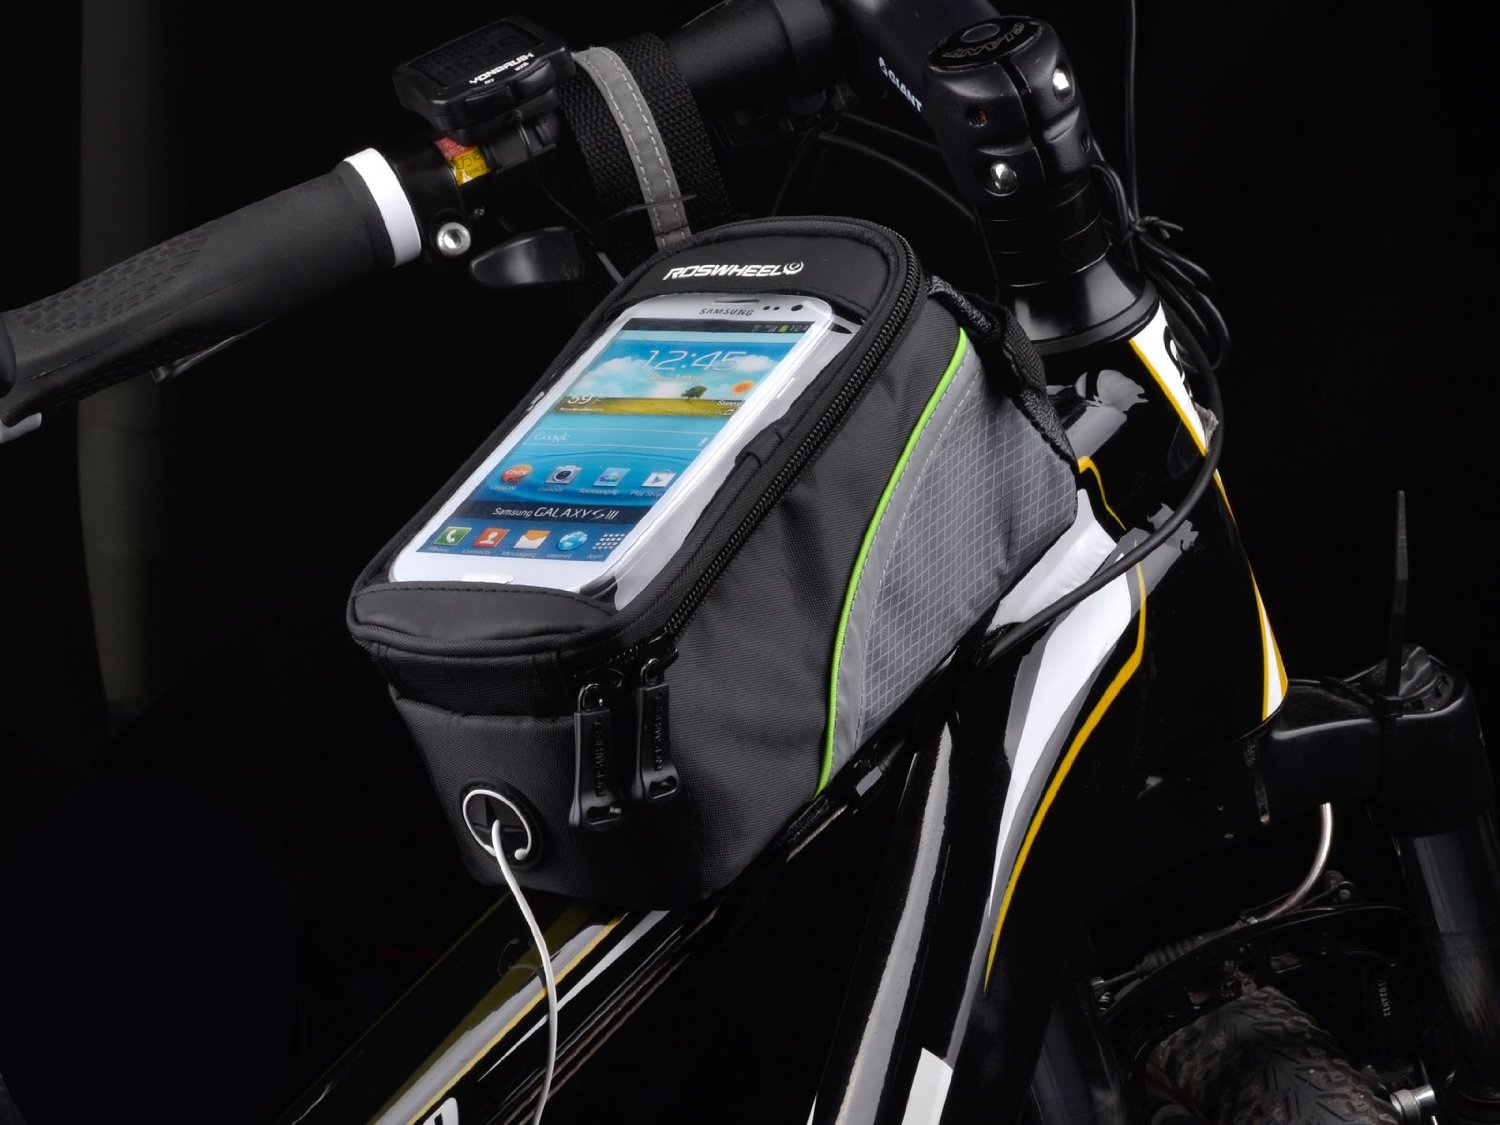 Bolsa frontal de bici sobre cuadro para smartphone